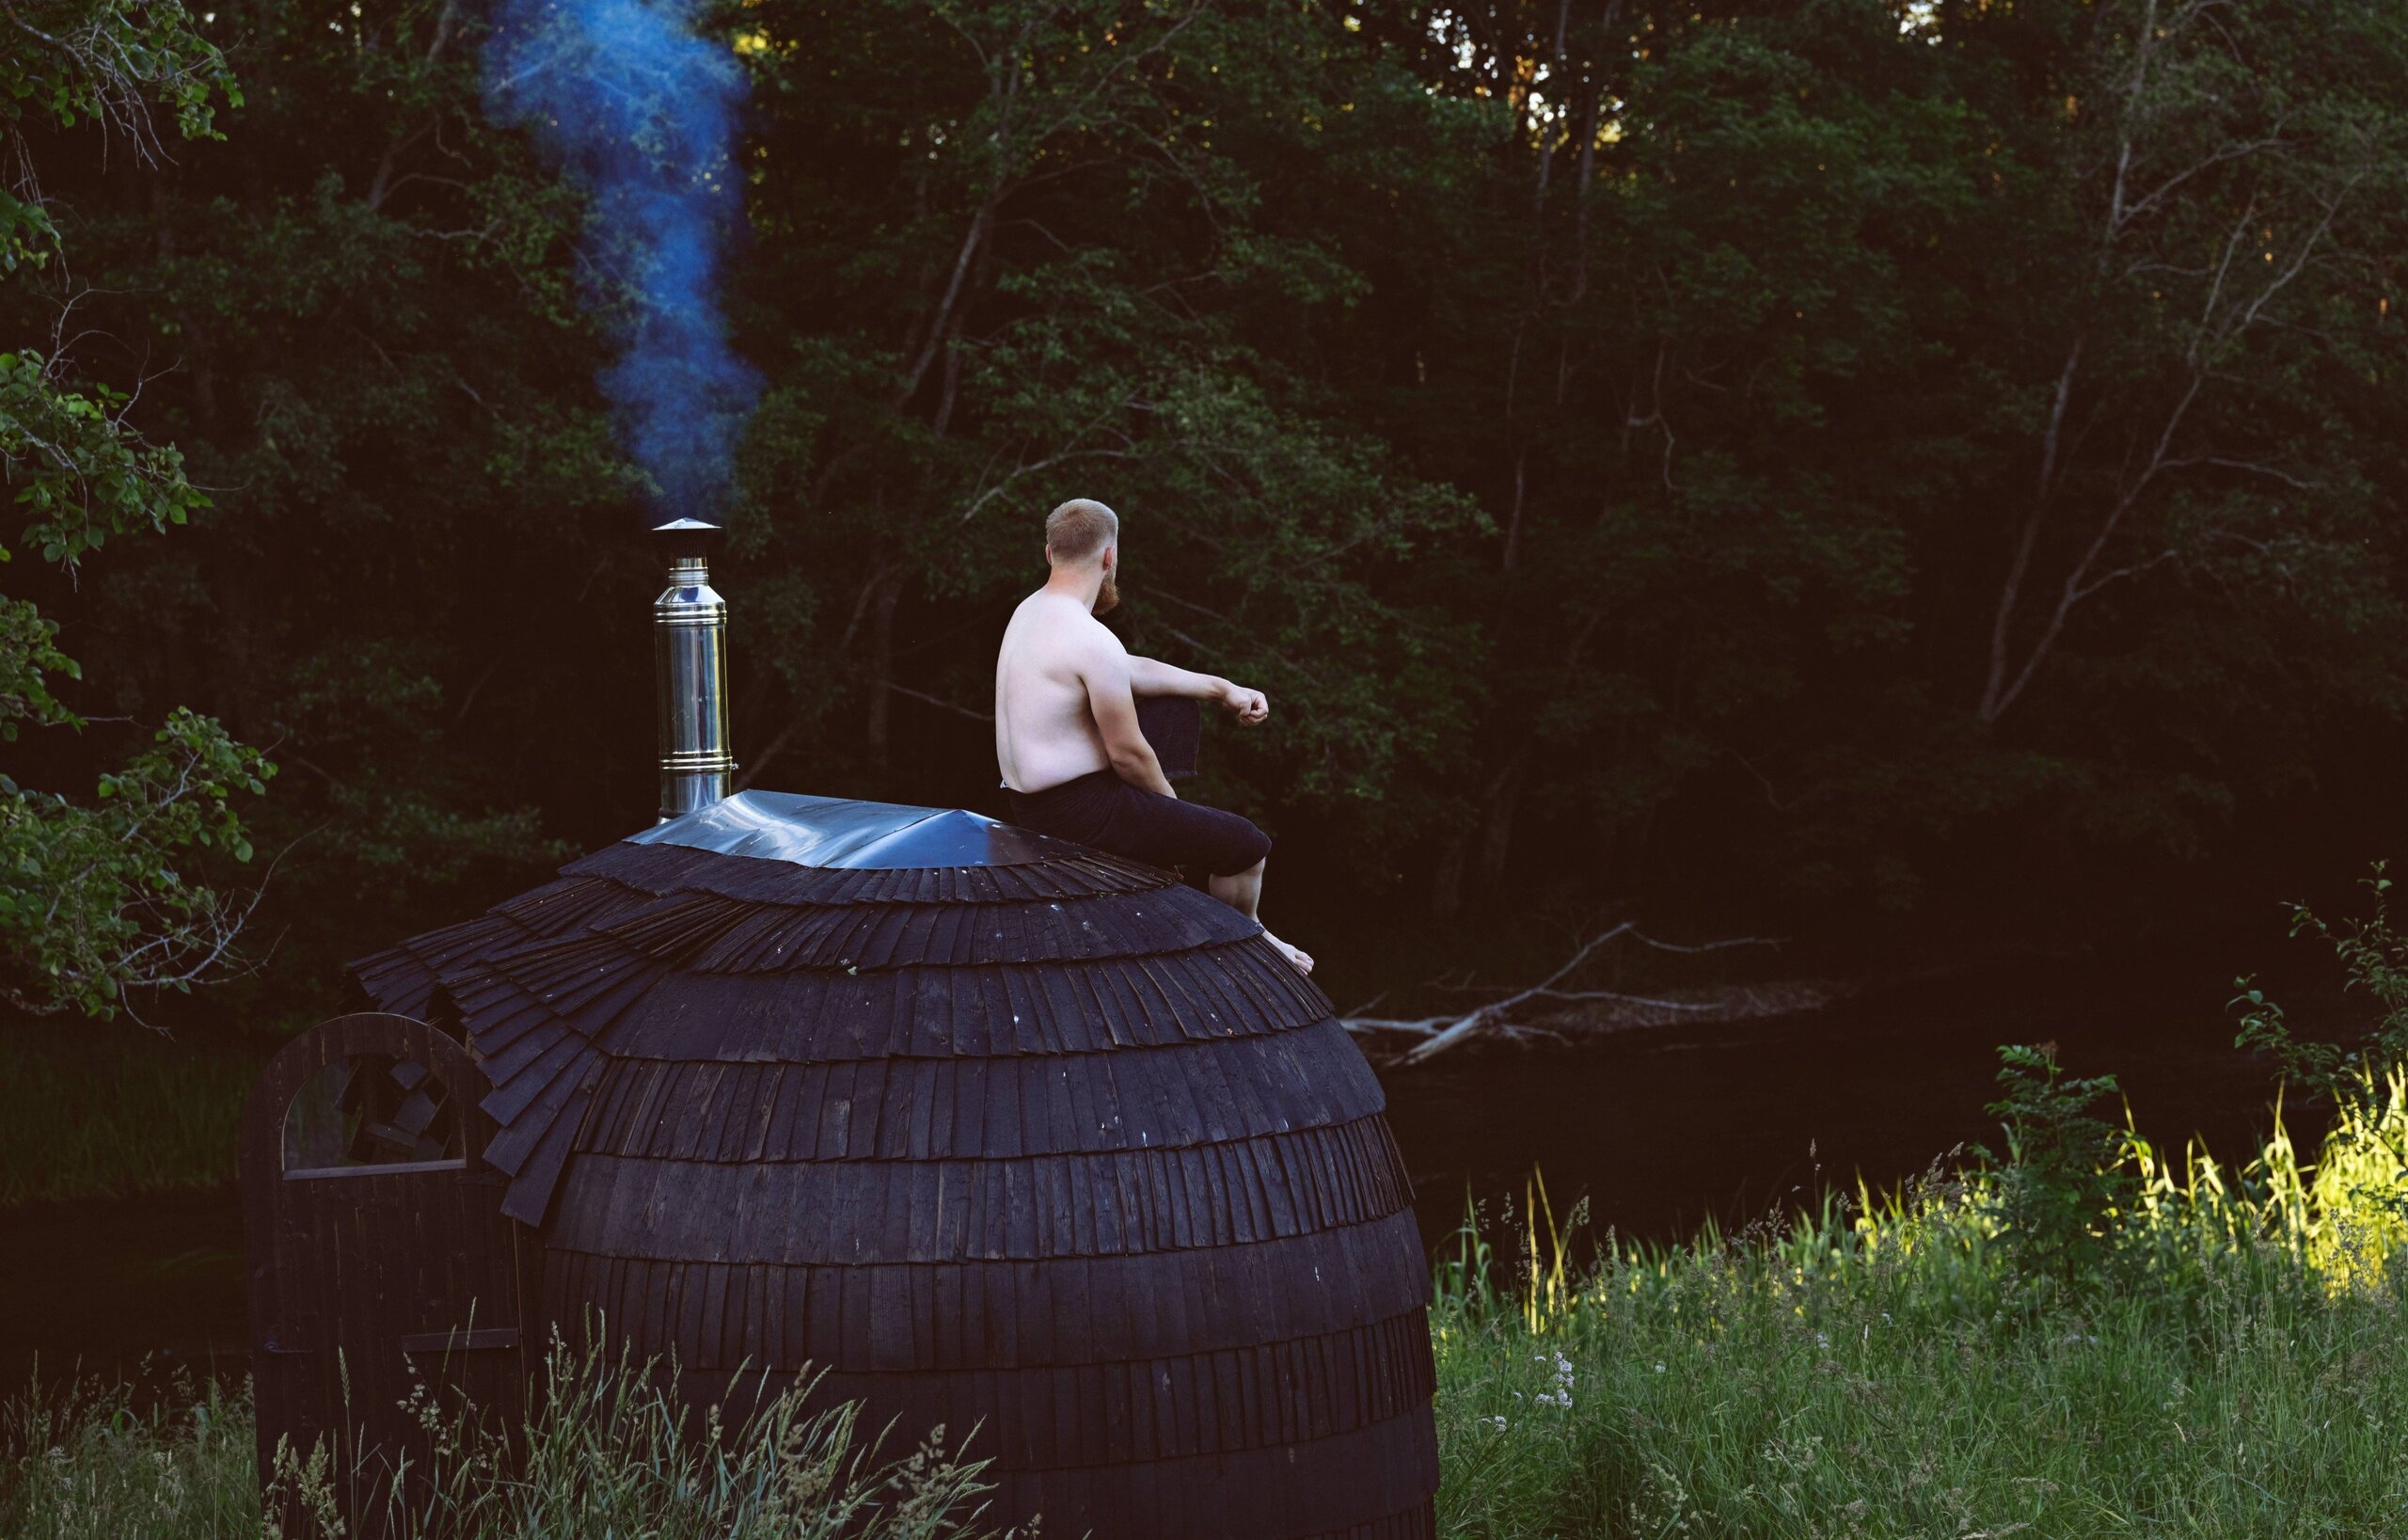 Man on top of a sauna